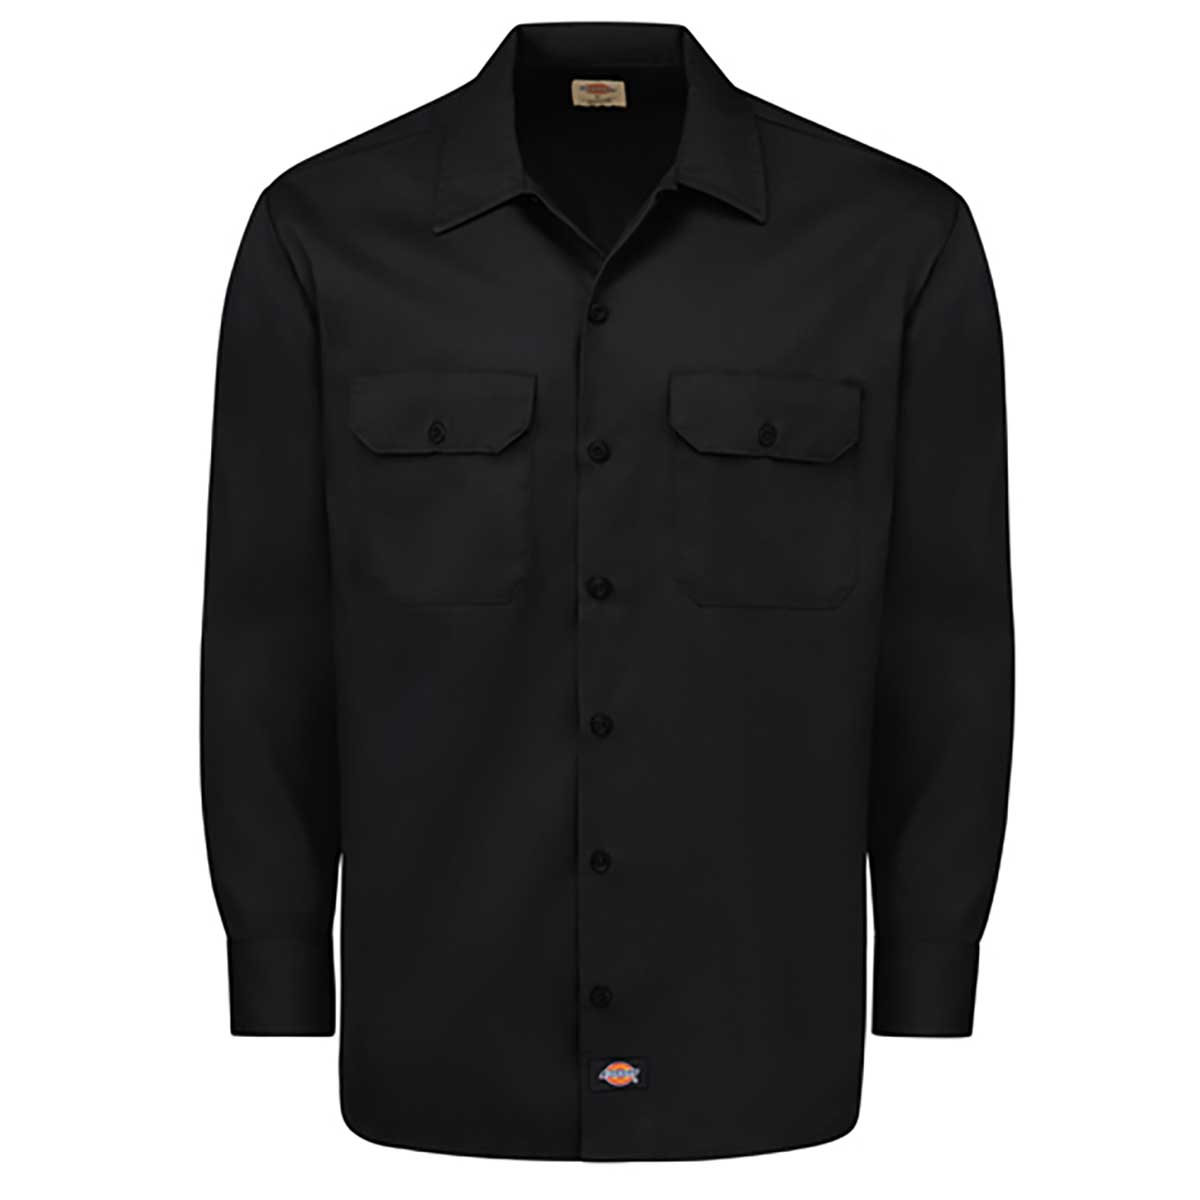 Dickies 574 Long Sleeve Work Shirt - Lincoln Green, S